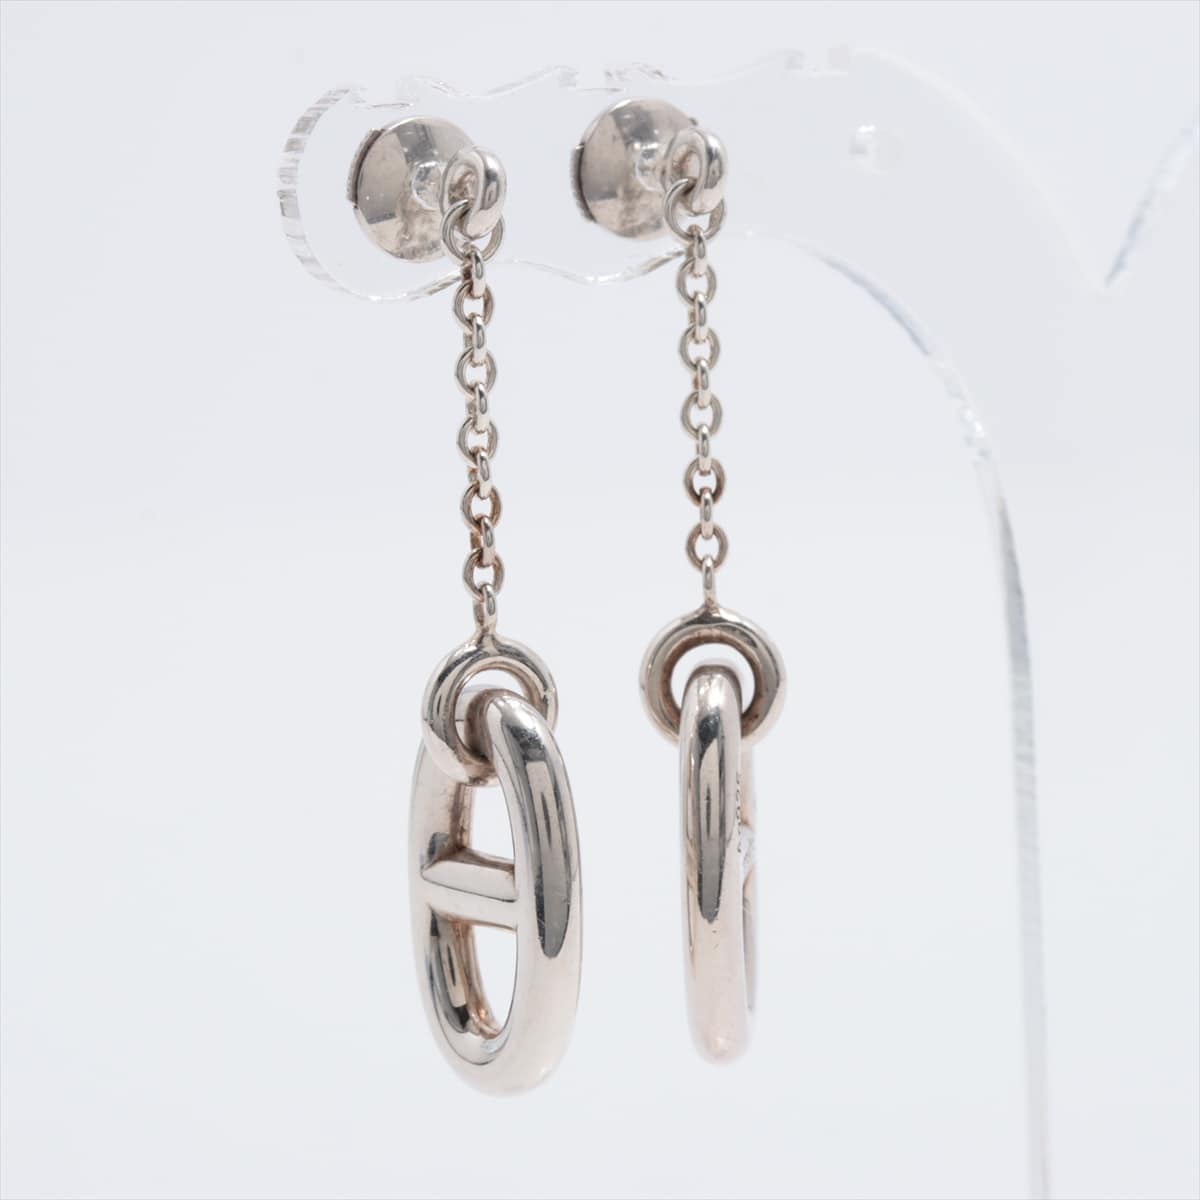 Hermès Chaîne d'Ancre Piercing jewelry (for both ears) 925 6.3g Silver